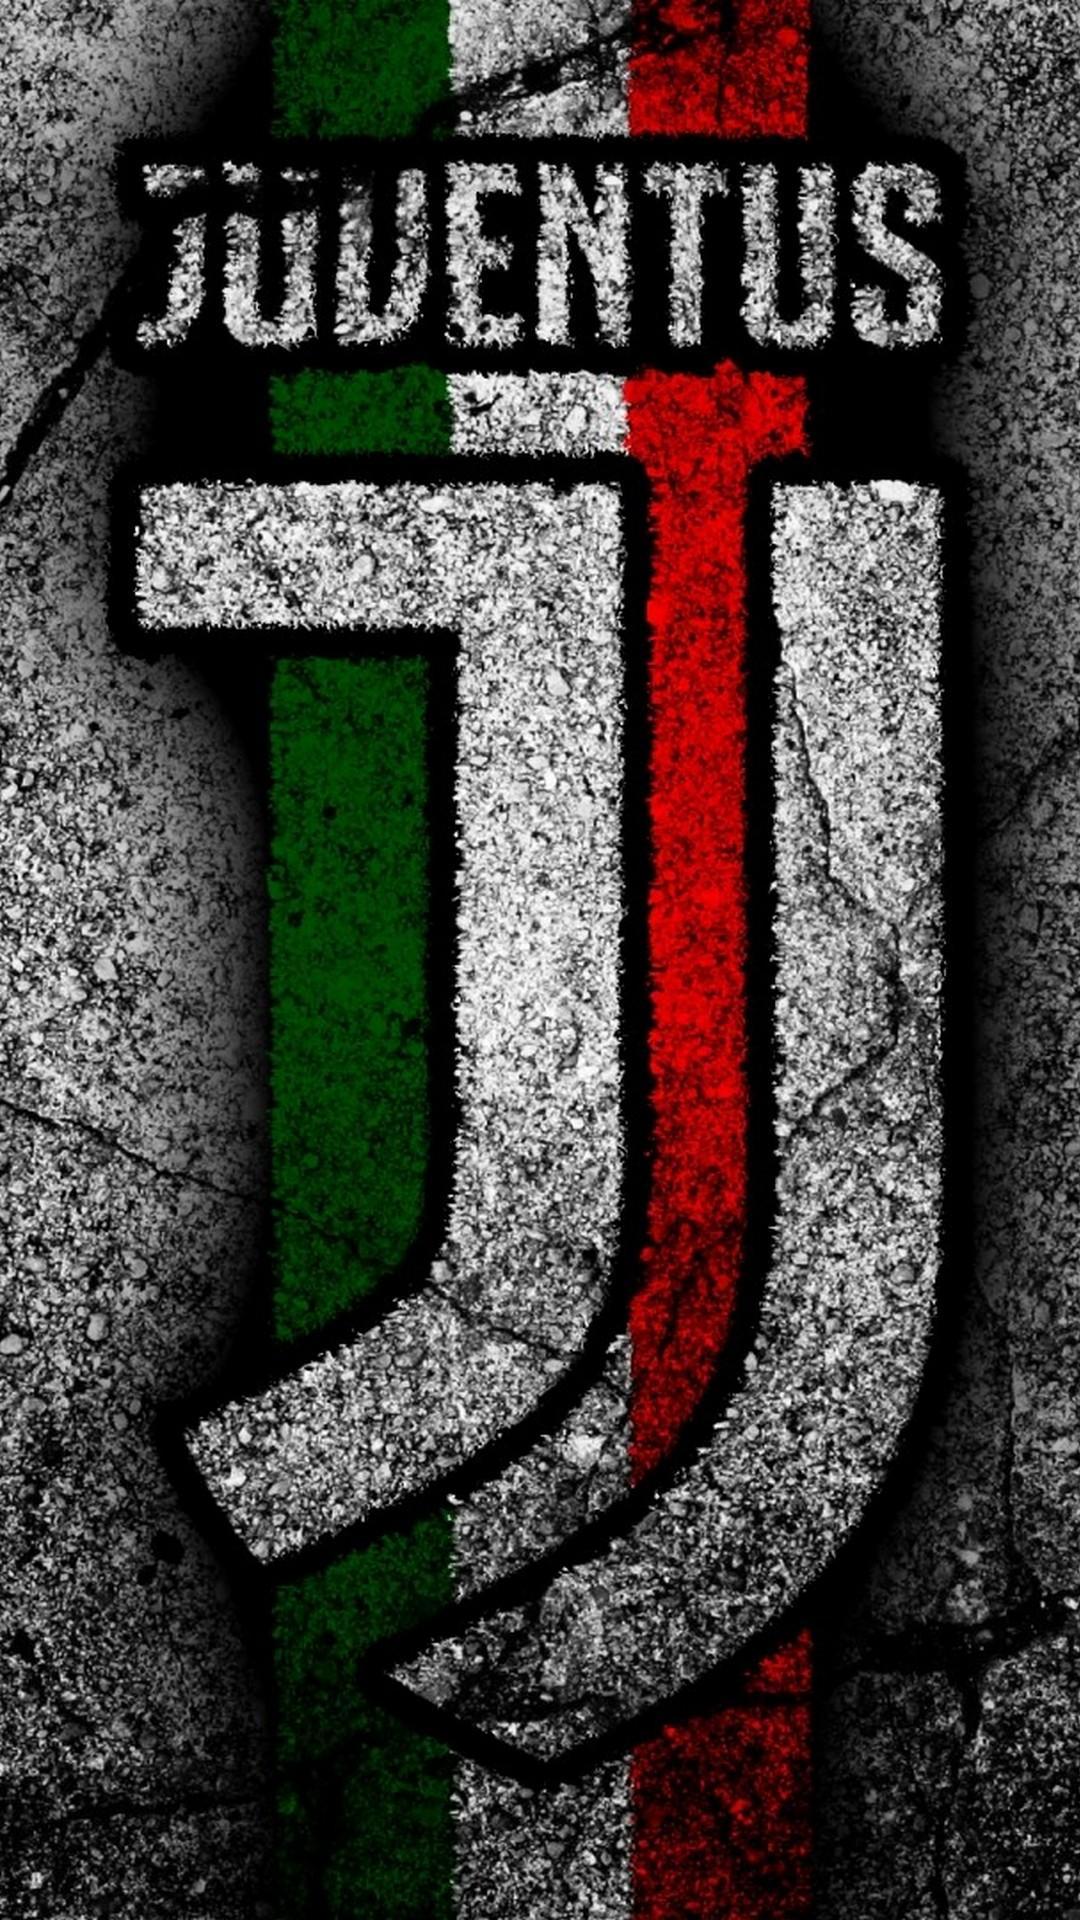 Juventus Iphone Wallpapers Top Free Juventus Iphone Backgrounds Wallpaperaccess